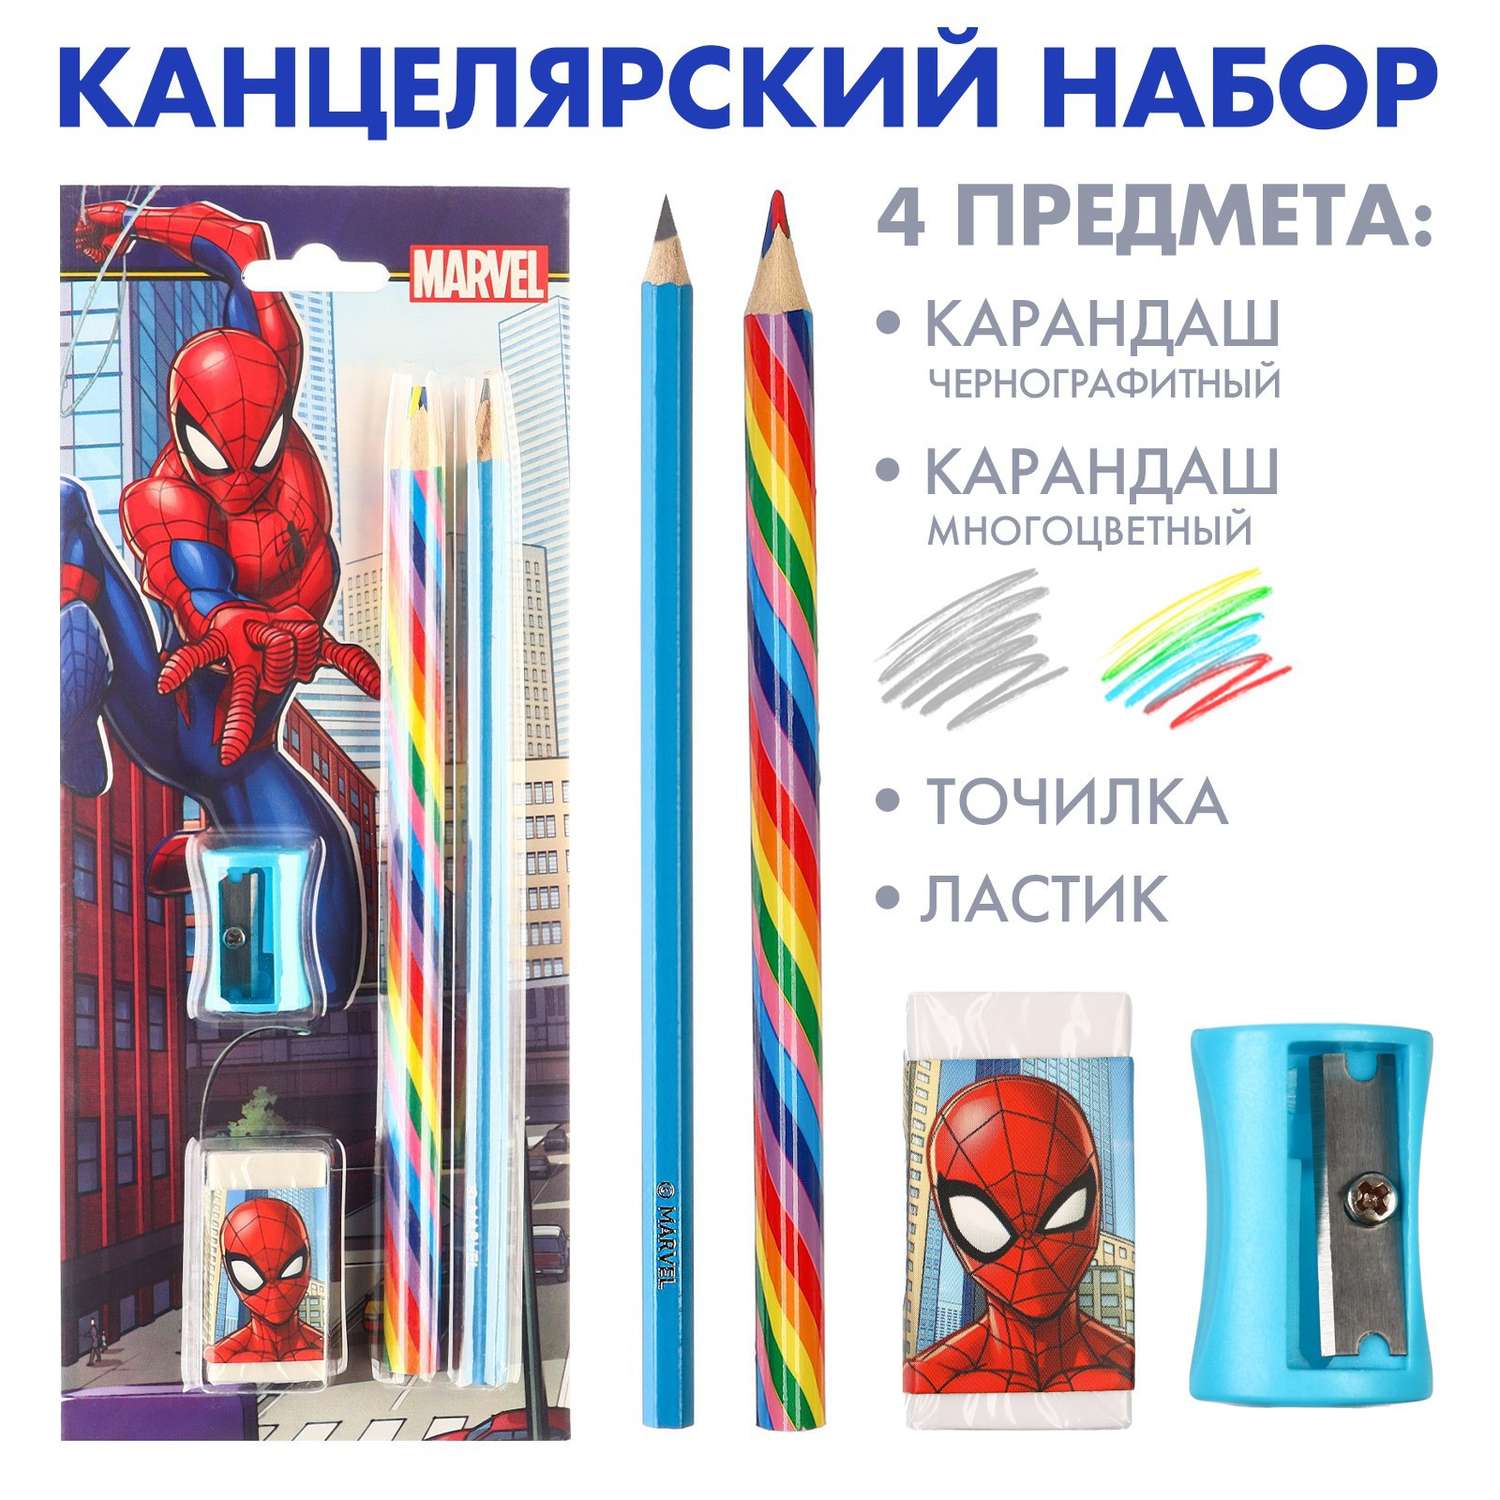 Набор Marvel канцелярский точилка ластик карандаш Человек-паук - фото 1